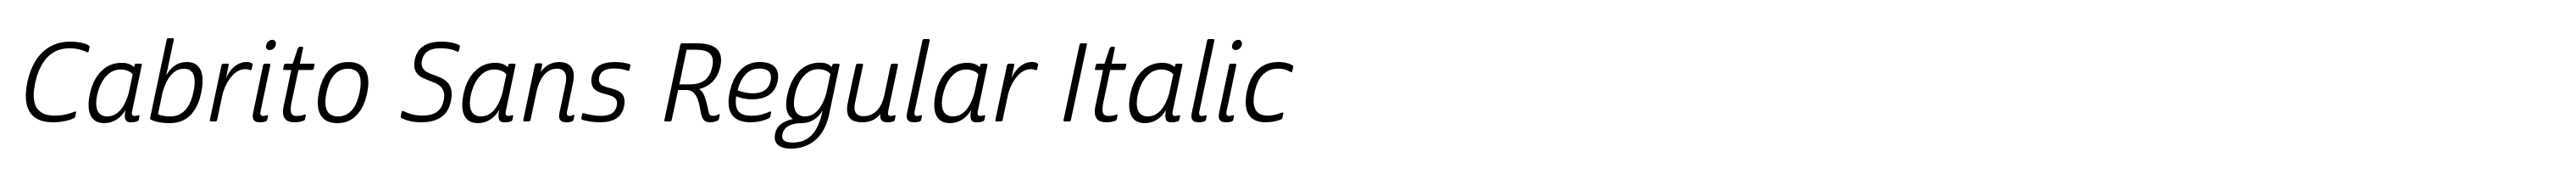 Cabrito Sans Regular Italic